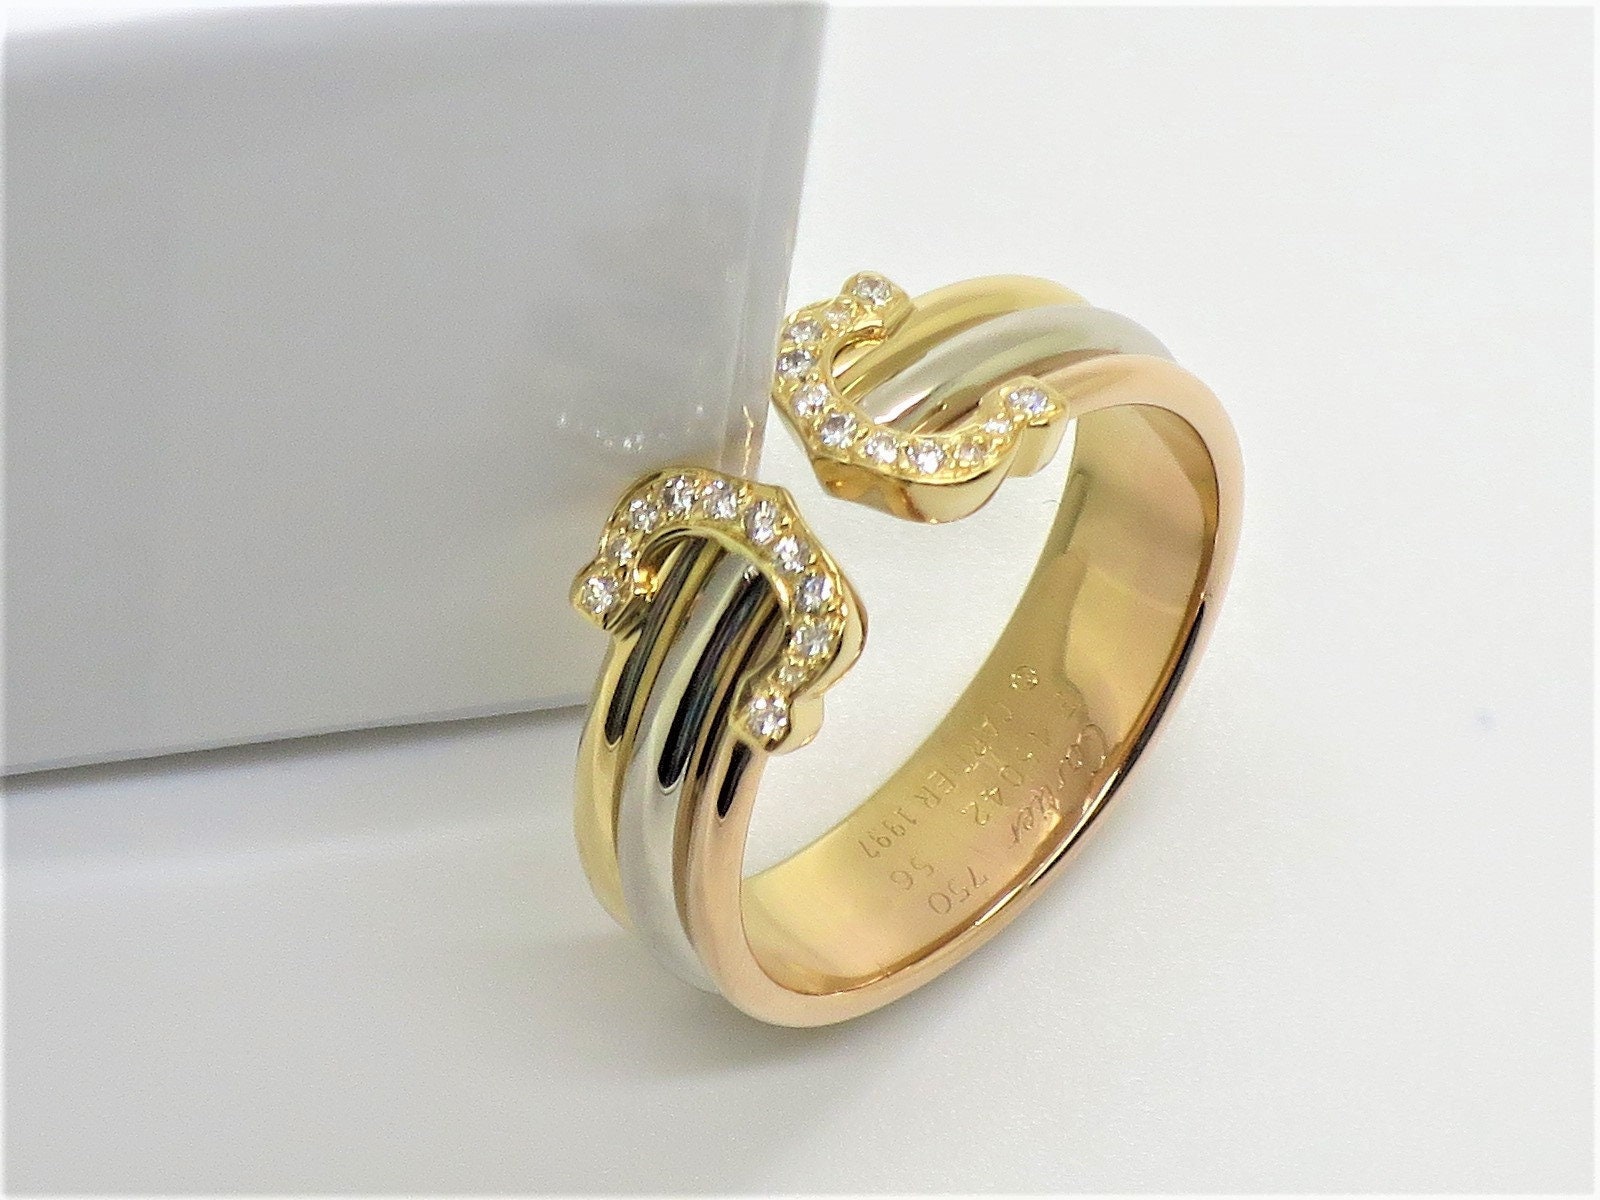 CARTIER, A DIAMOND ENTRELACES C RING in 18ct white gold,… | Drouot.com